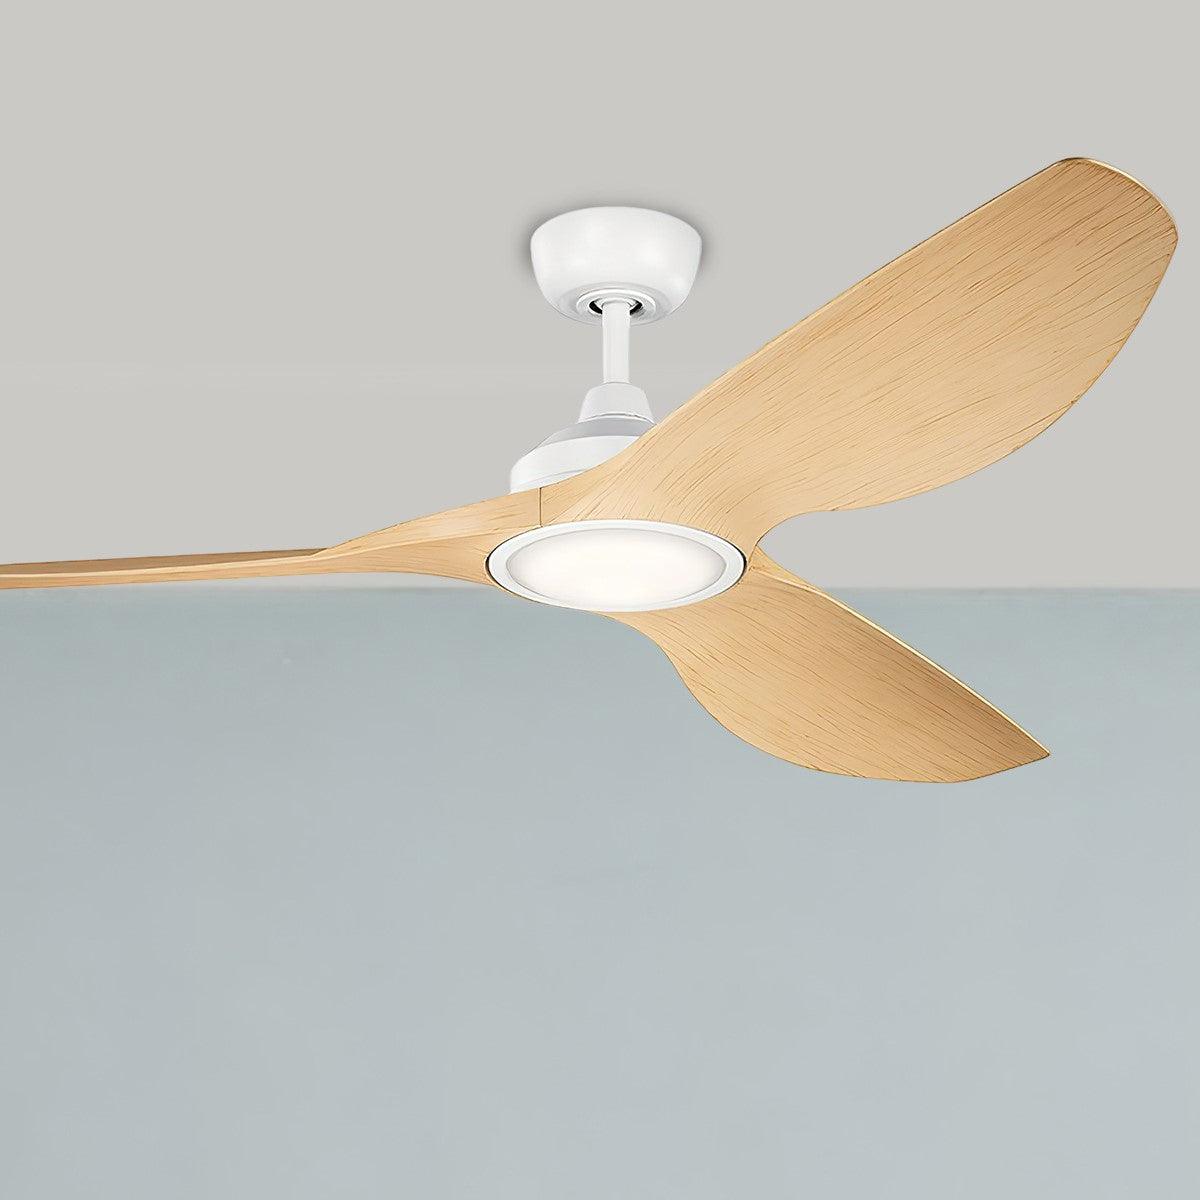 Imari 65 Inch Propeller Indoor/Outdoor Ceiling Fan With Light, Wall Control Included - Bees Lighting